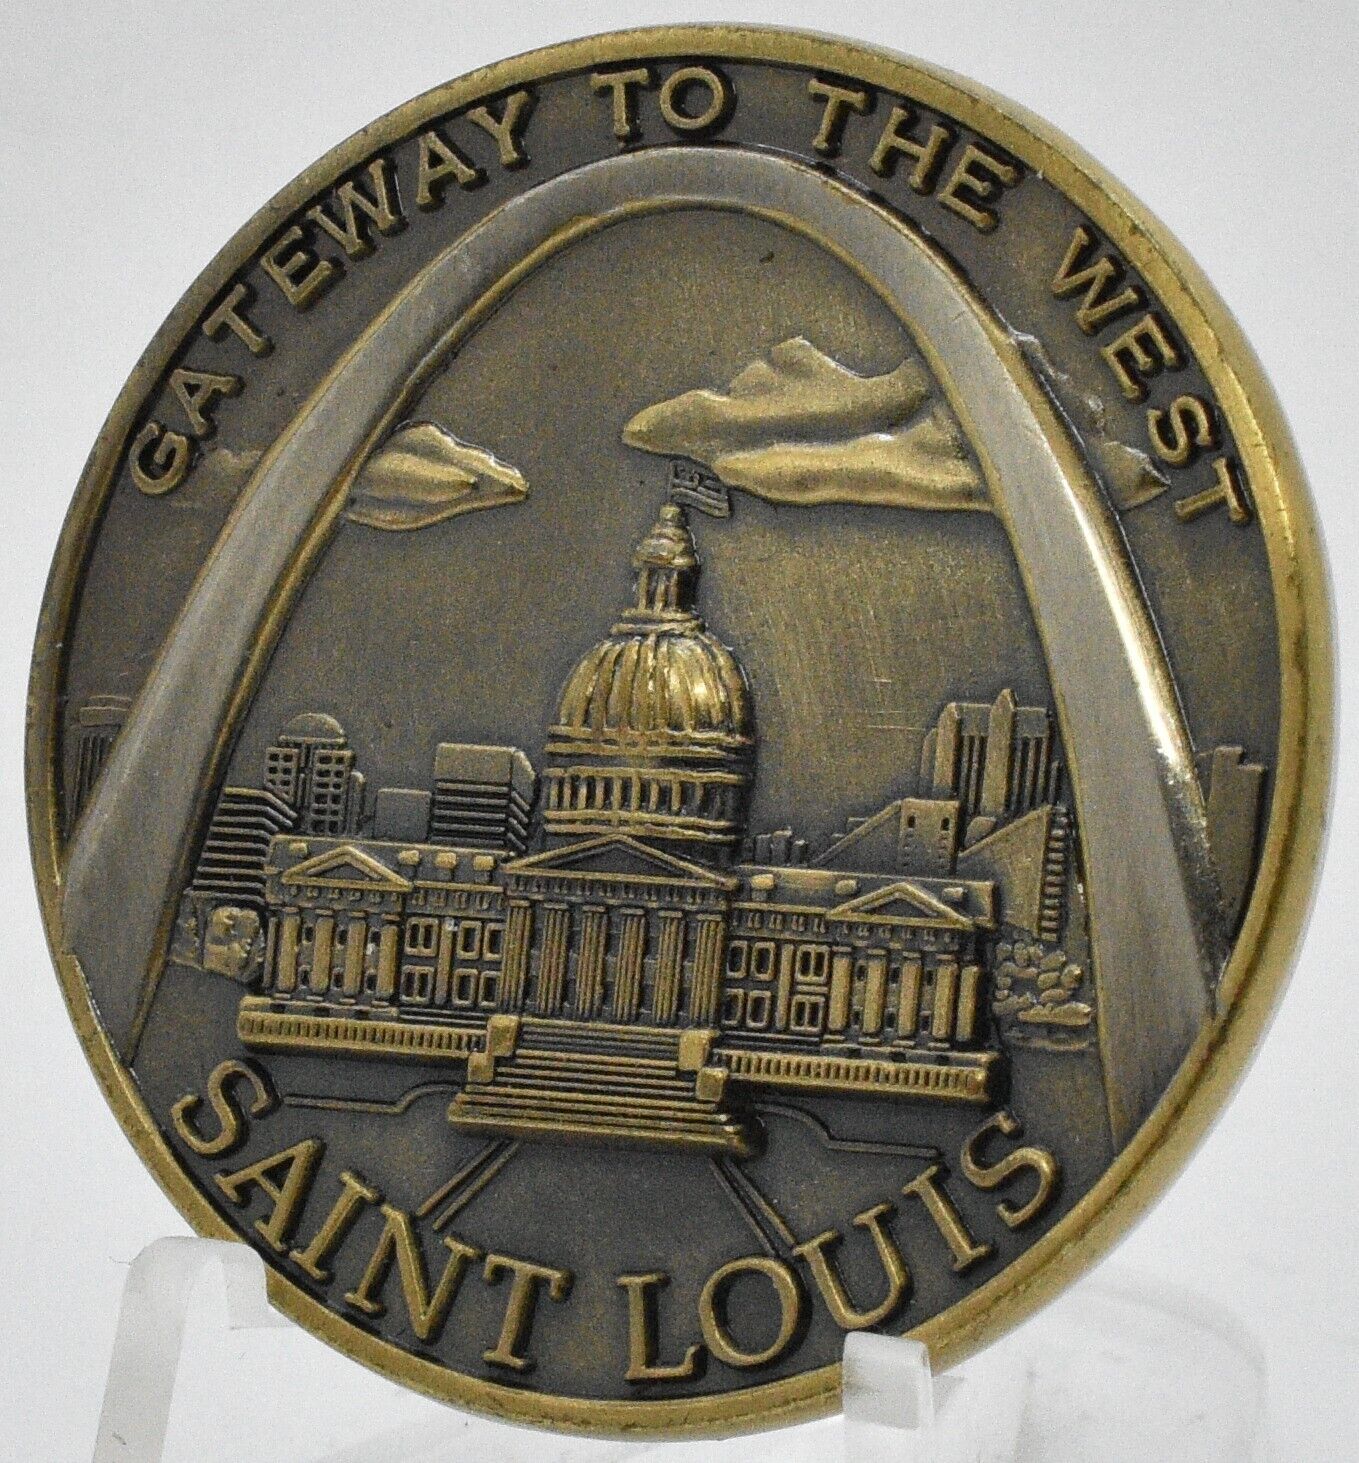 FBI Saint Louis Missouri Division Challenge Coin